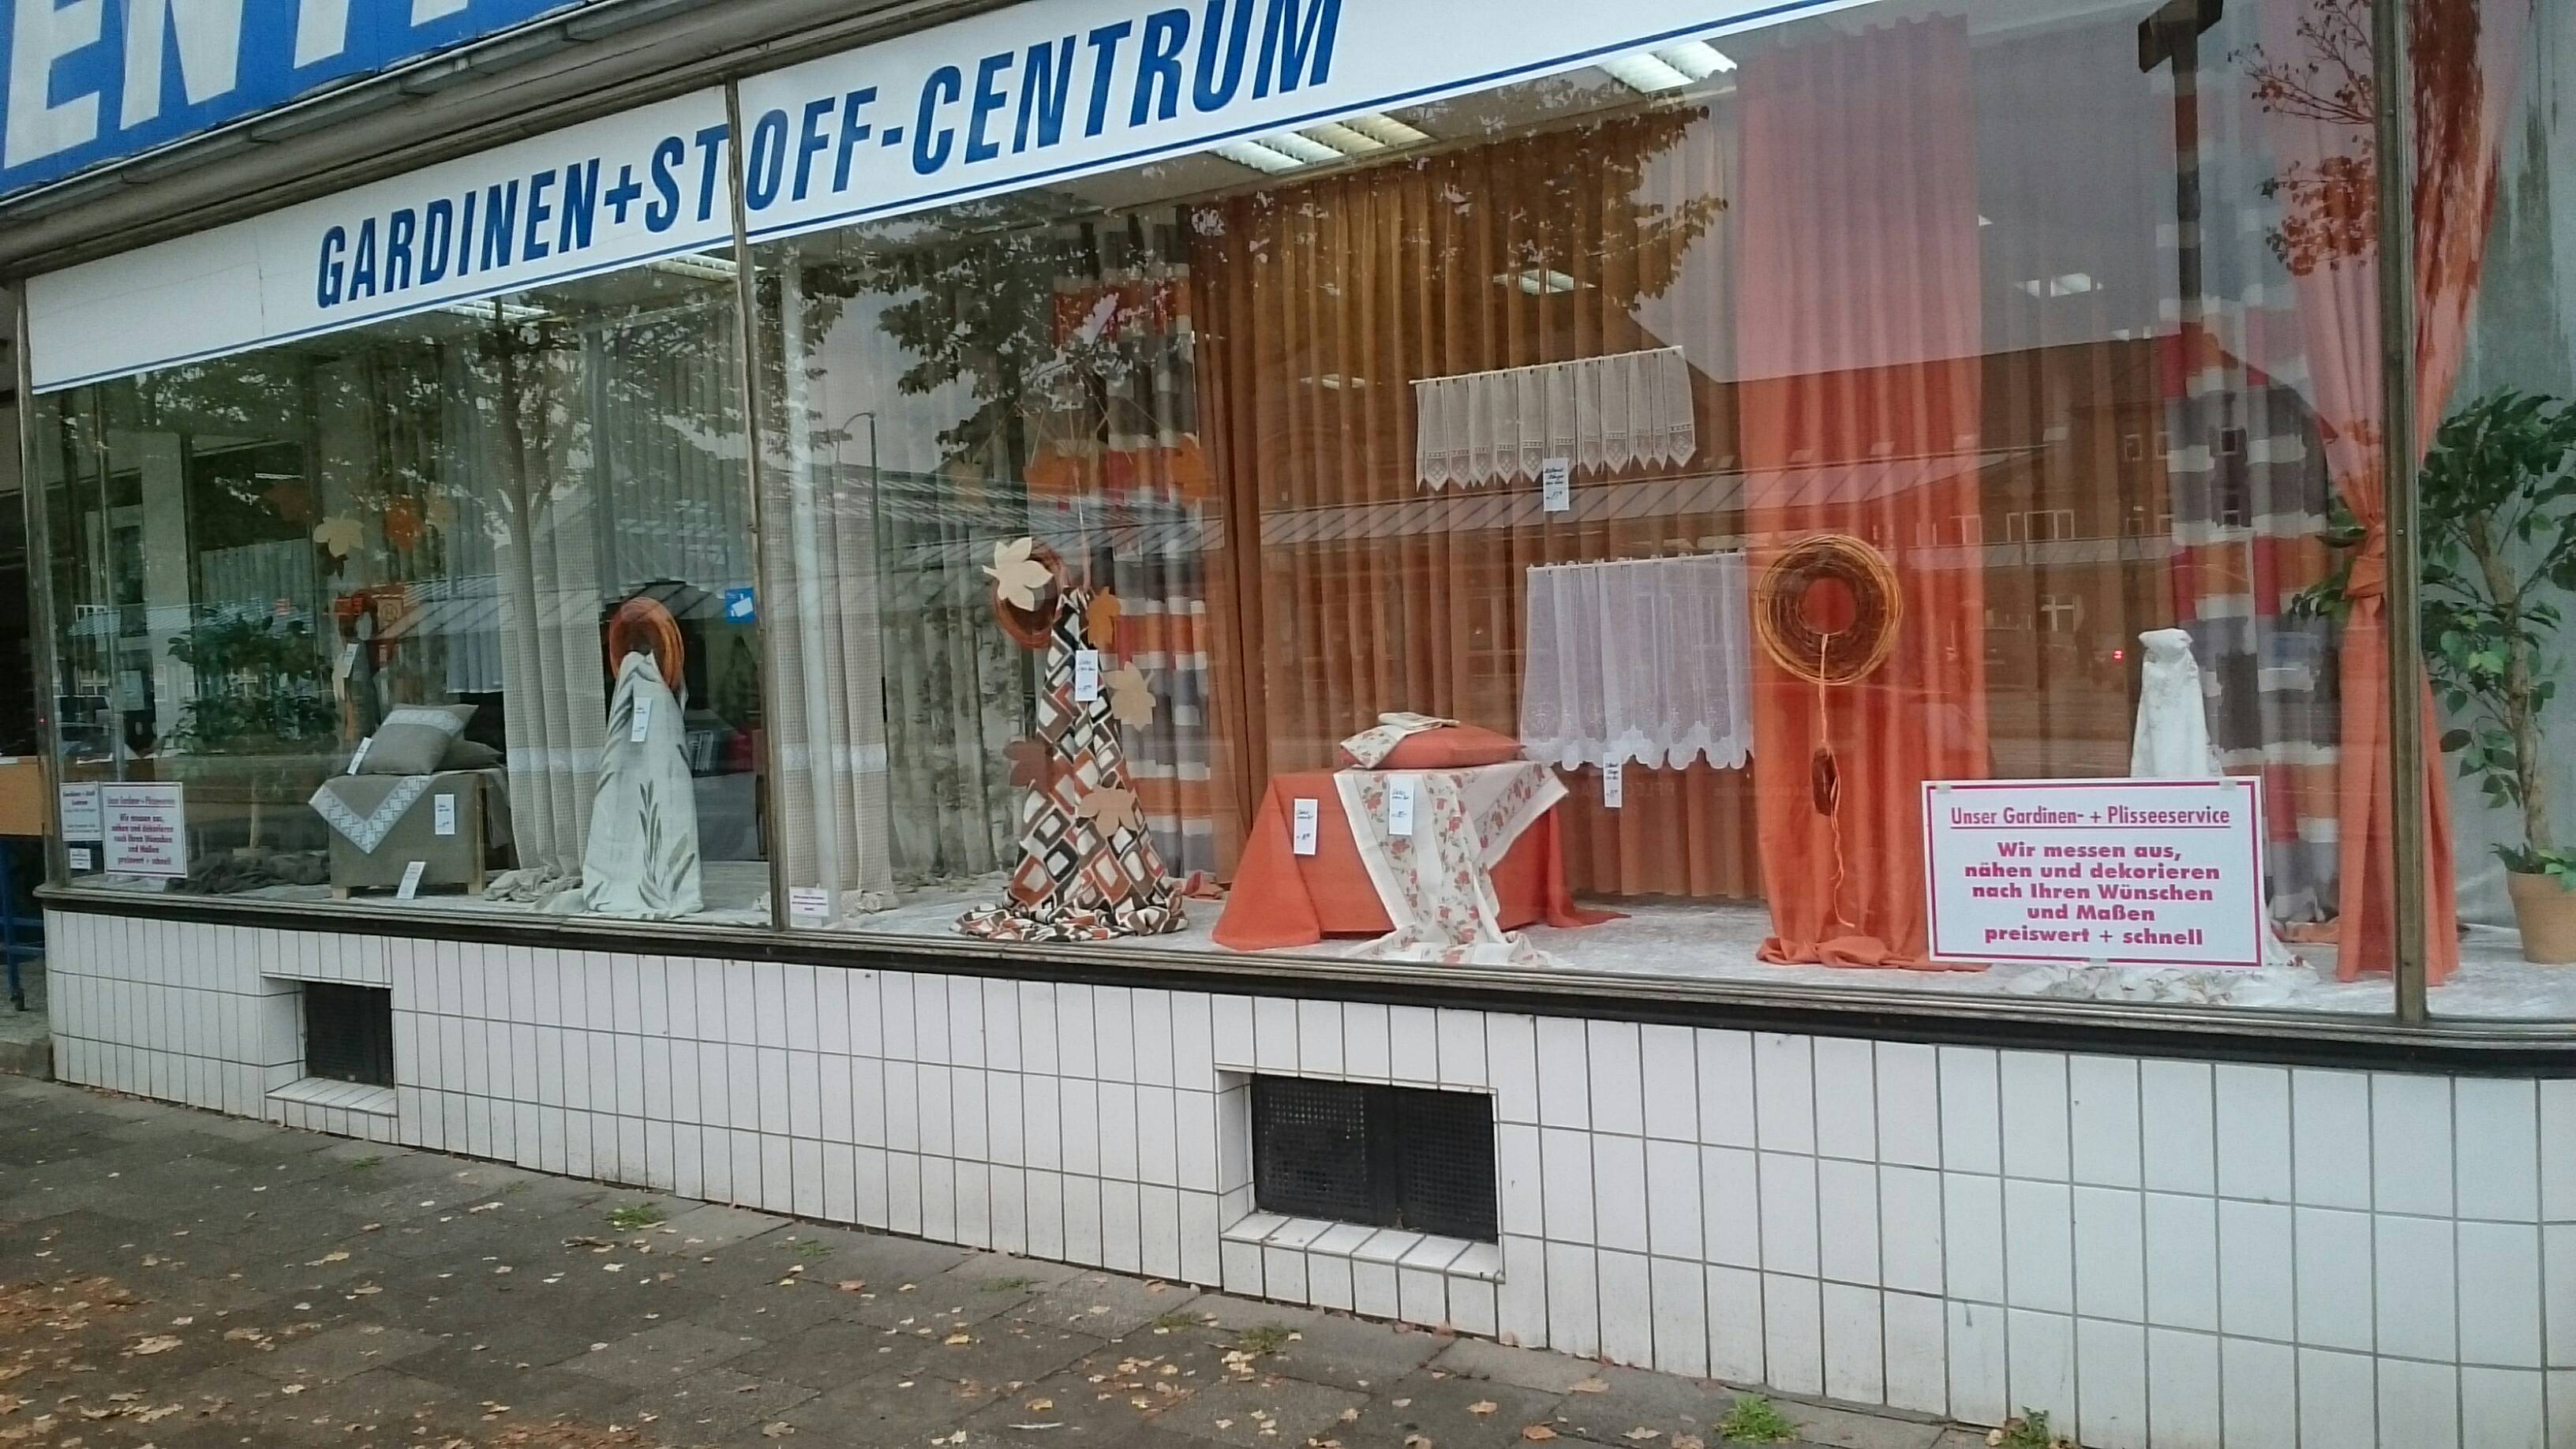 Bild 1 Gardinen + Stoff Zentrum in Bremerhaven